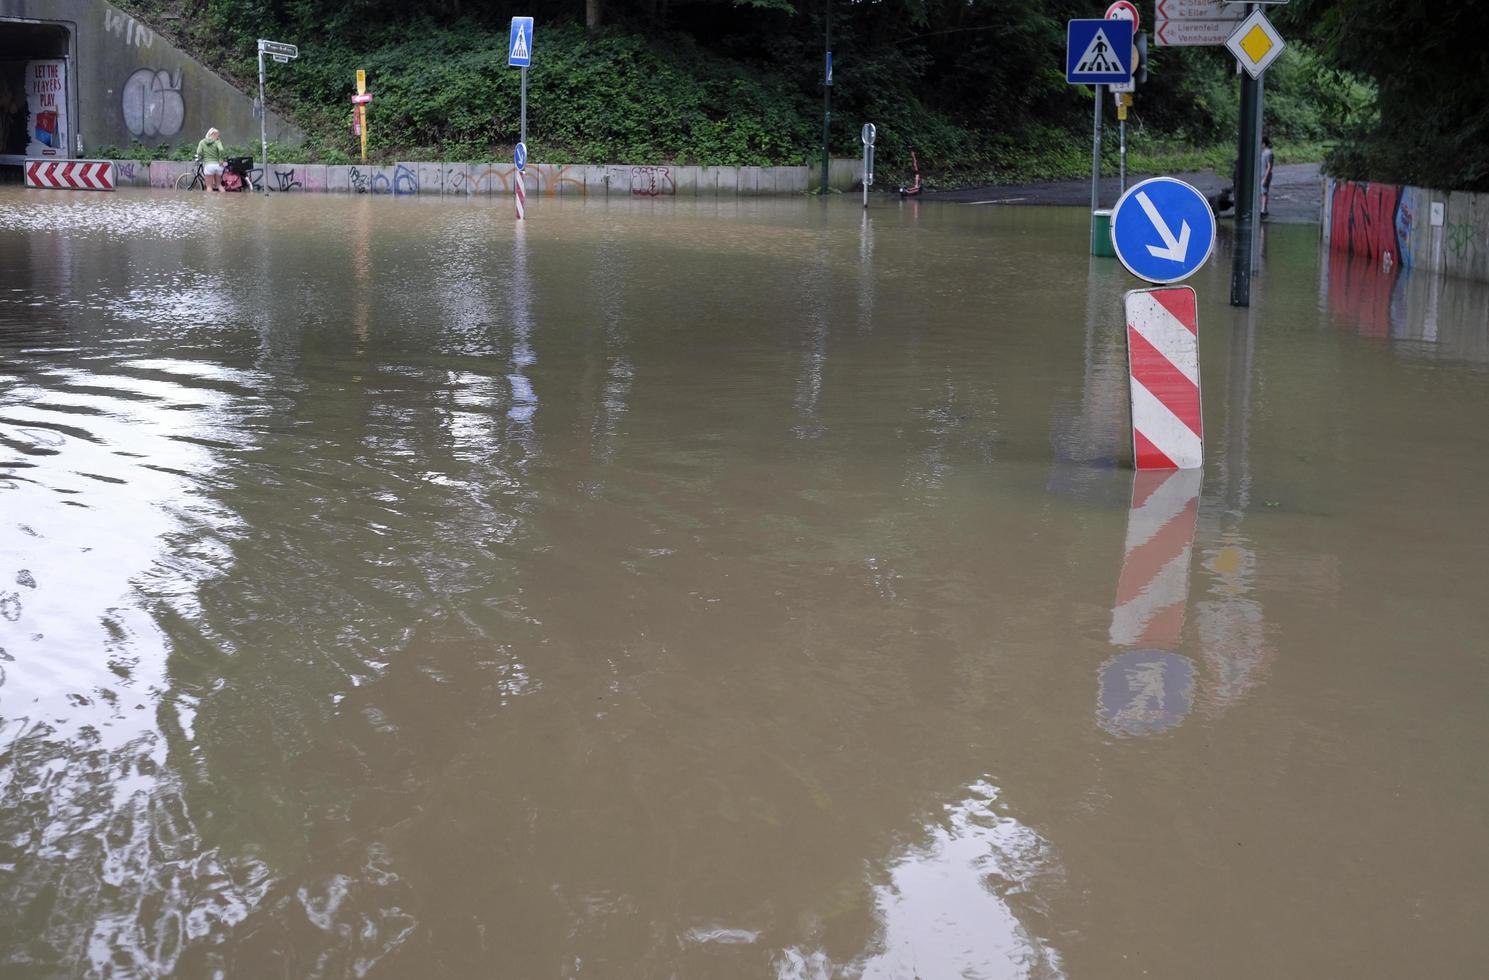 dusseldorf, Germania, 2021 - estremo tempo metereologico - allagato strada nel dusseldorf, Germania foto